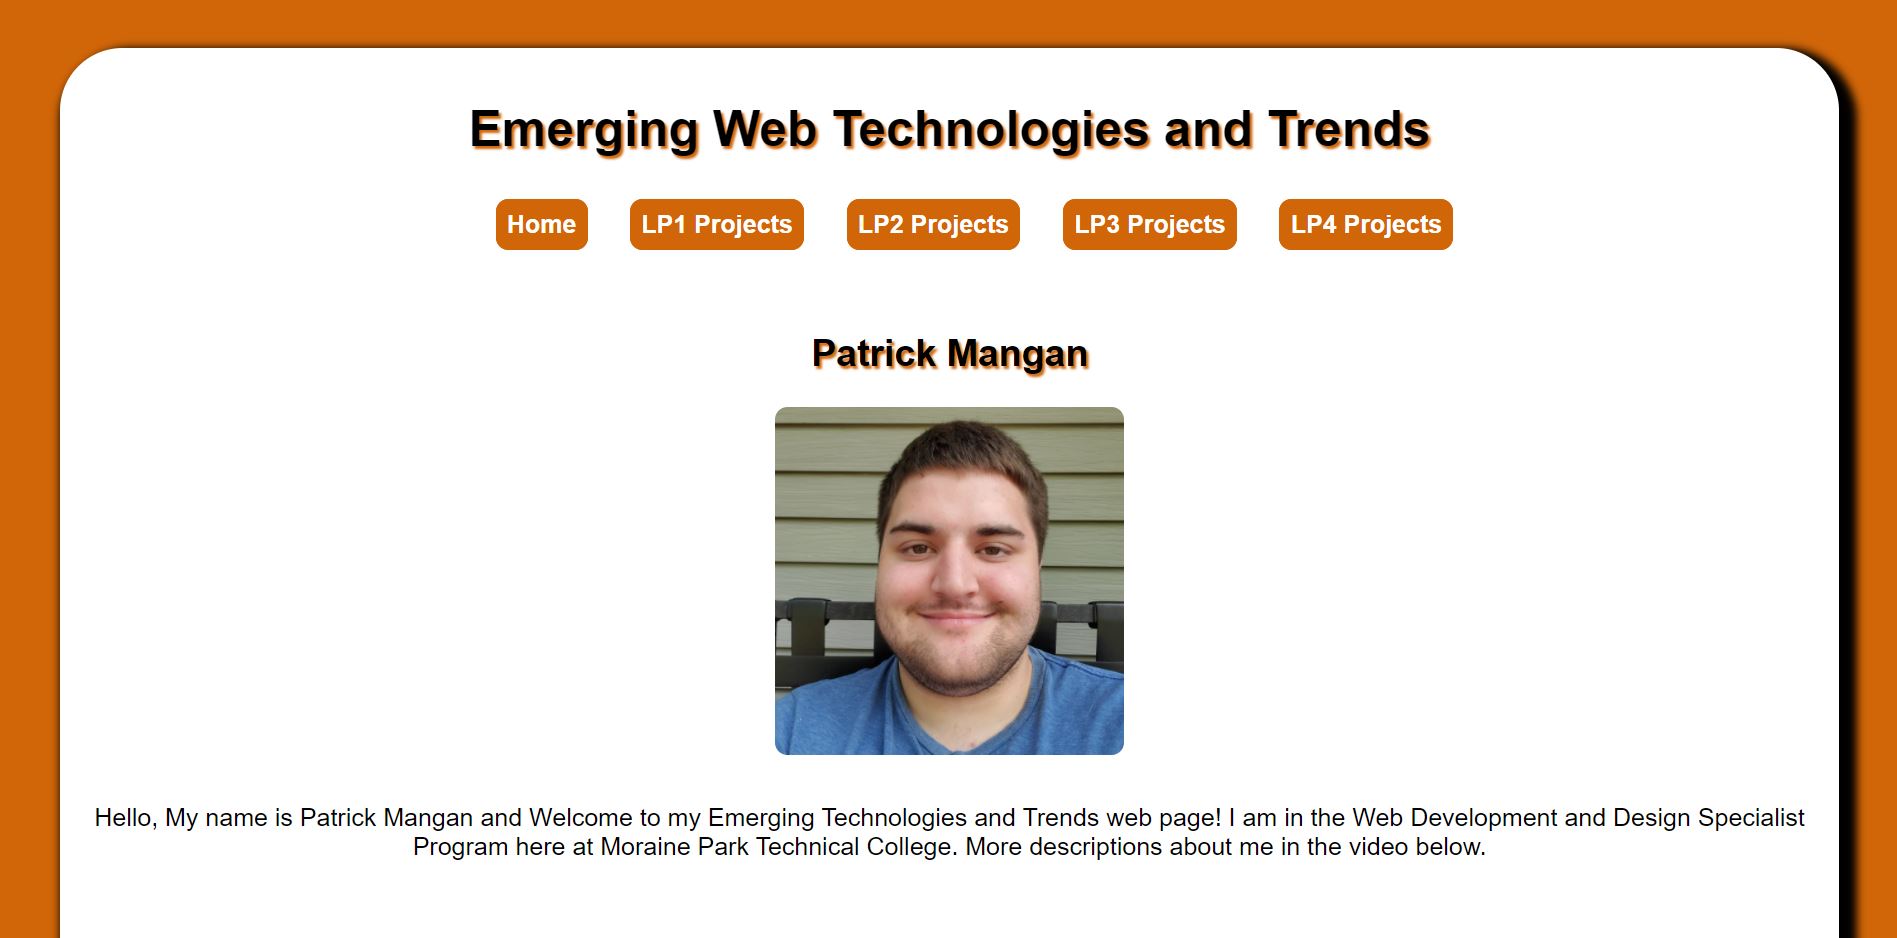 Patrick Mangan's Emerging Web Technologies and Trends